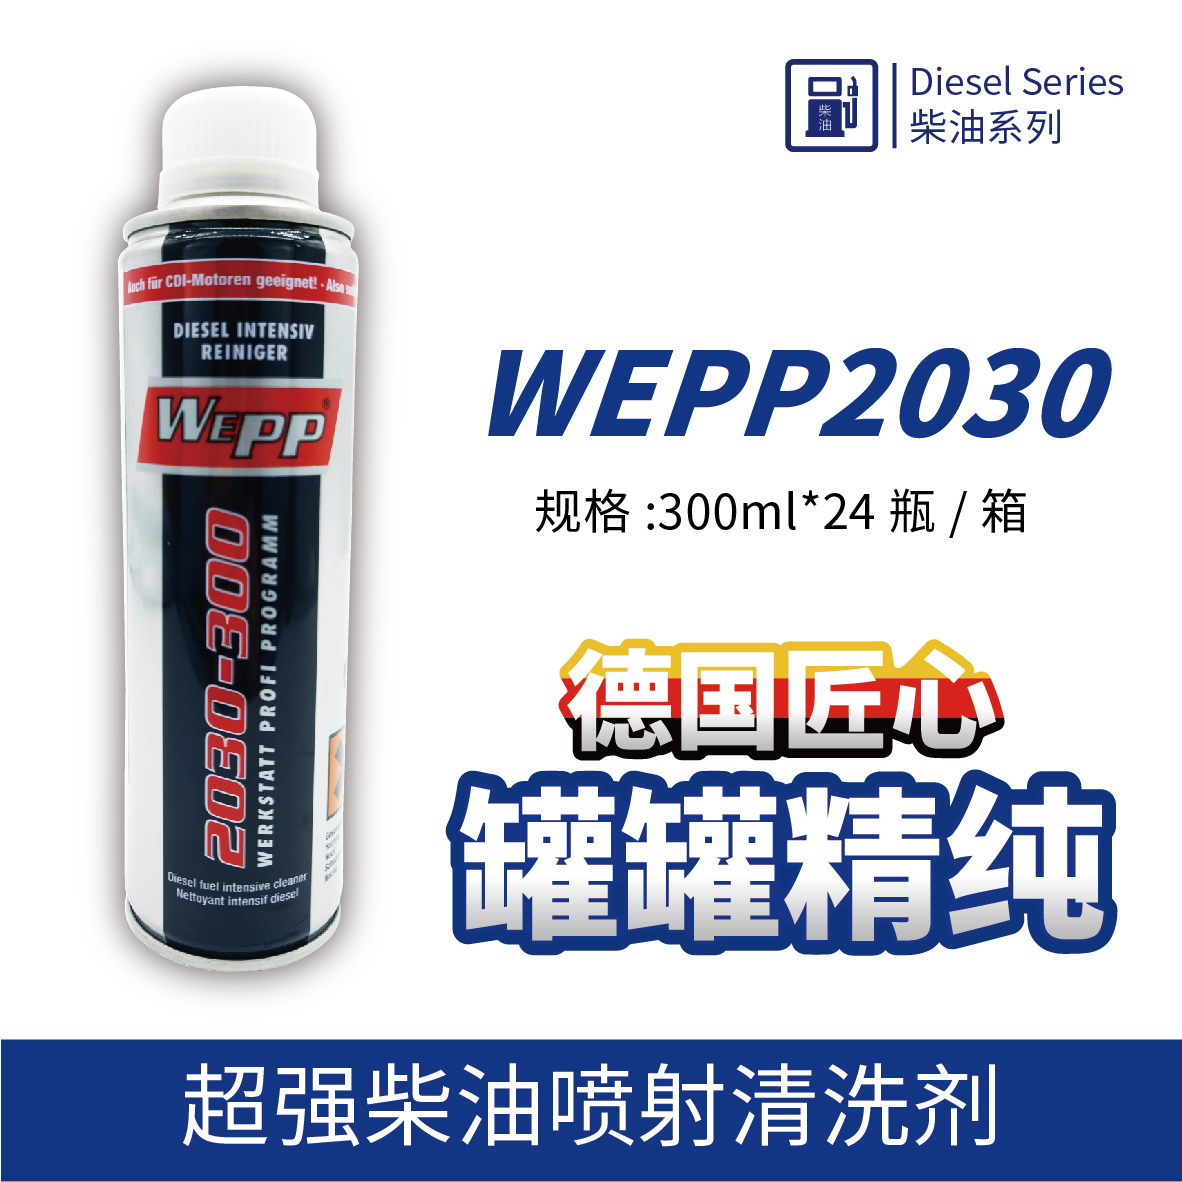 WEPP2030 超强柴油喷射清洗剂